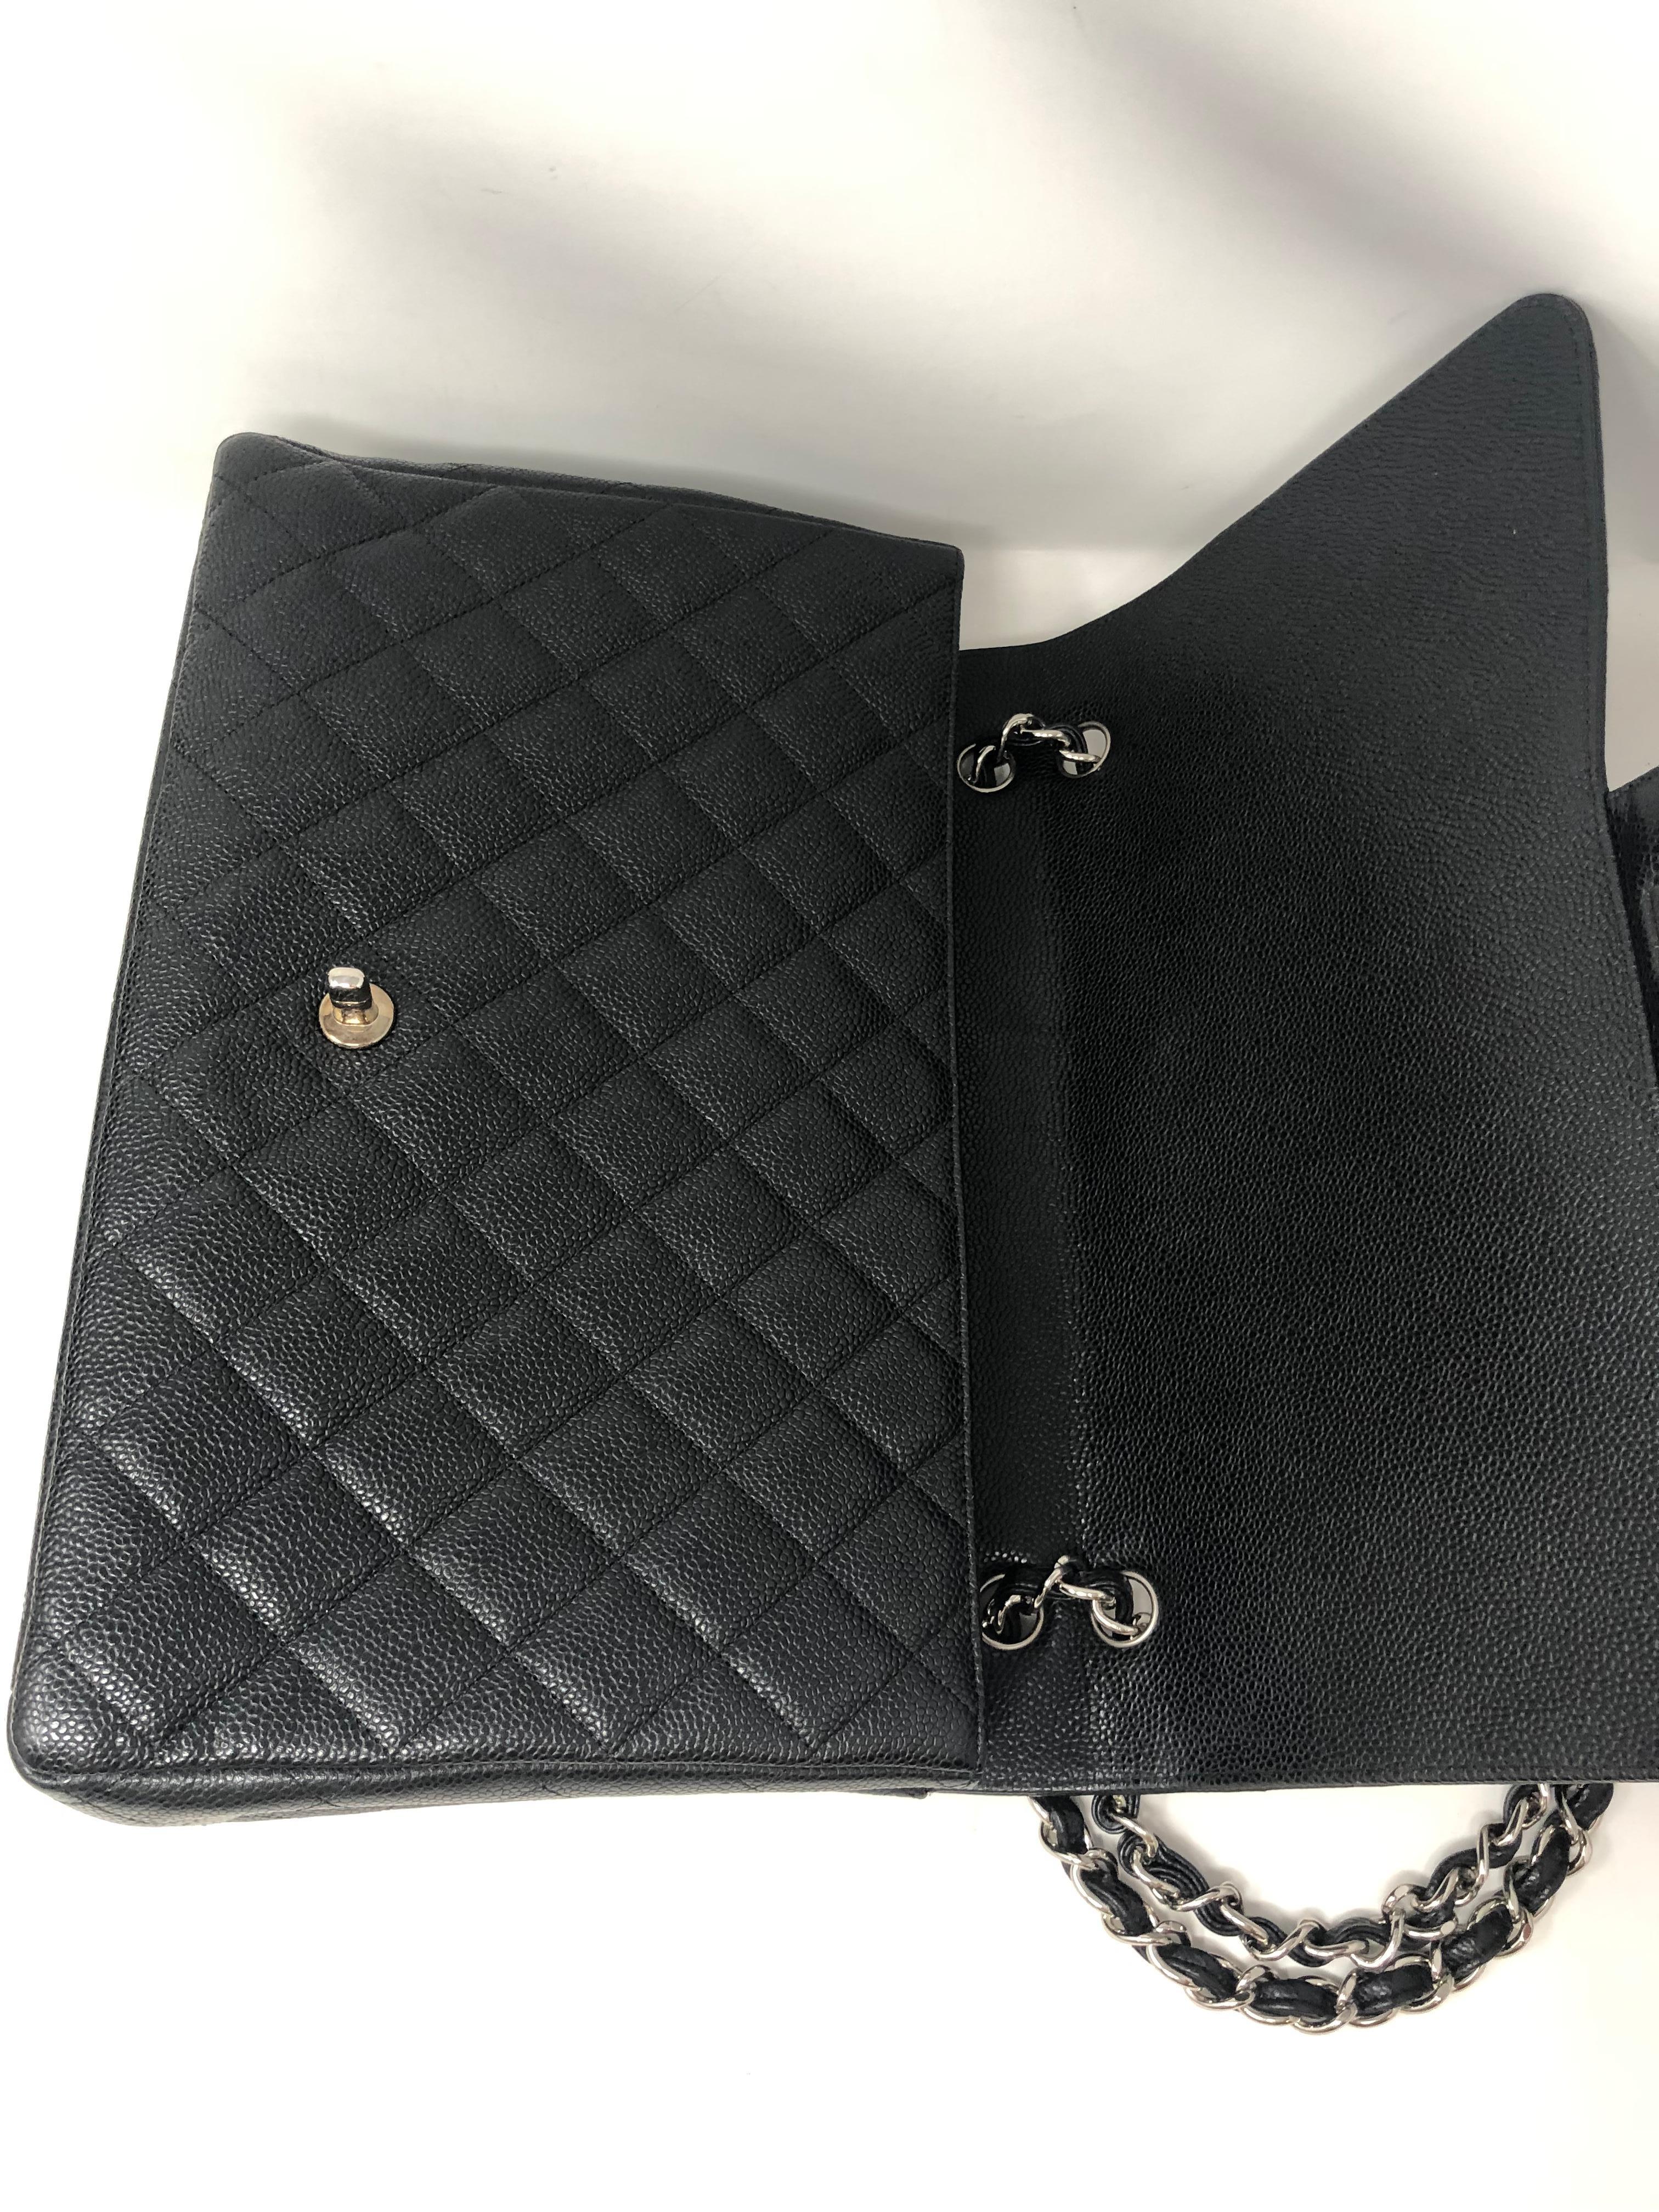 Chanel Black Caviar Leather Maxi Bag 2